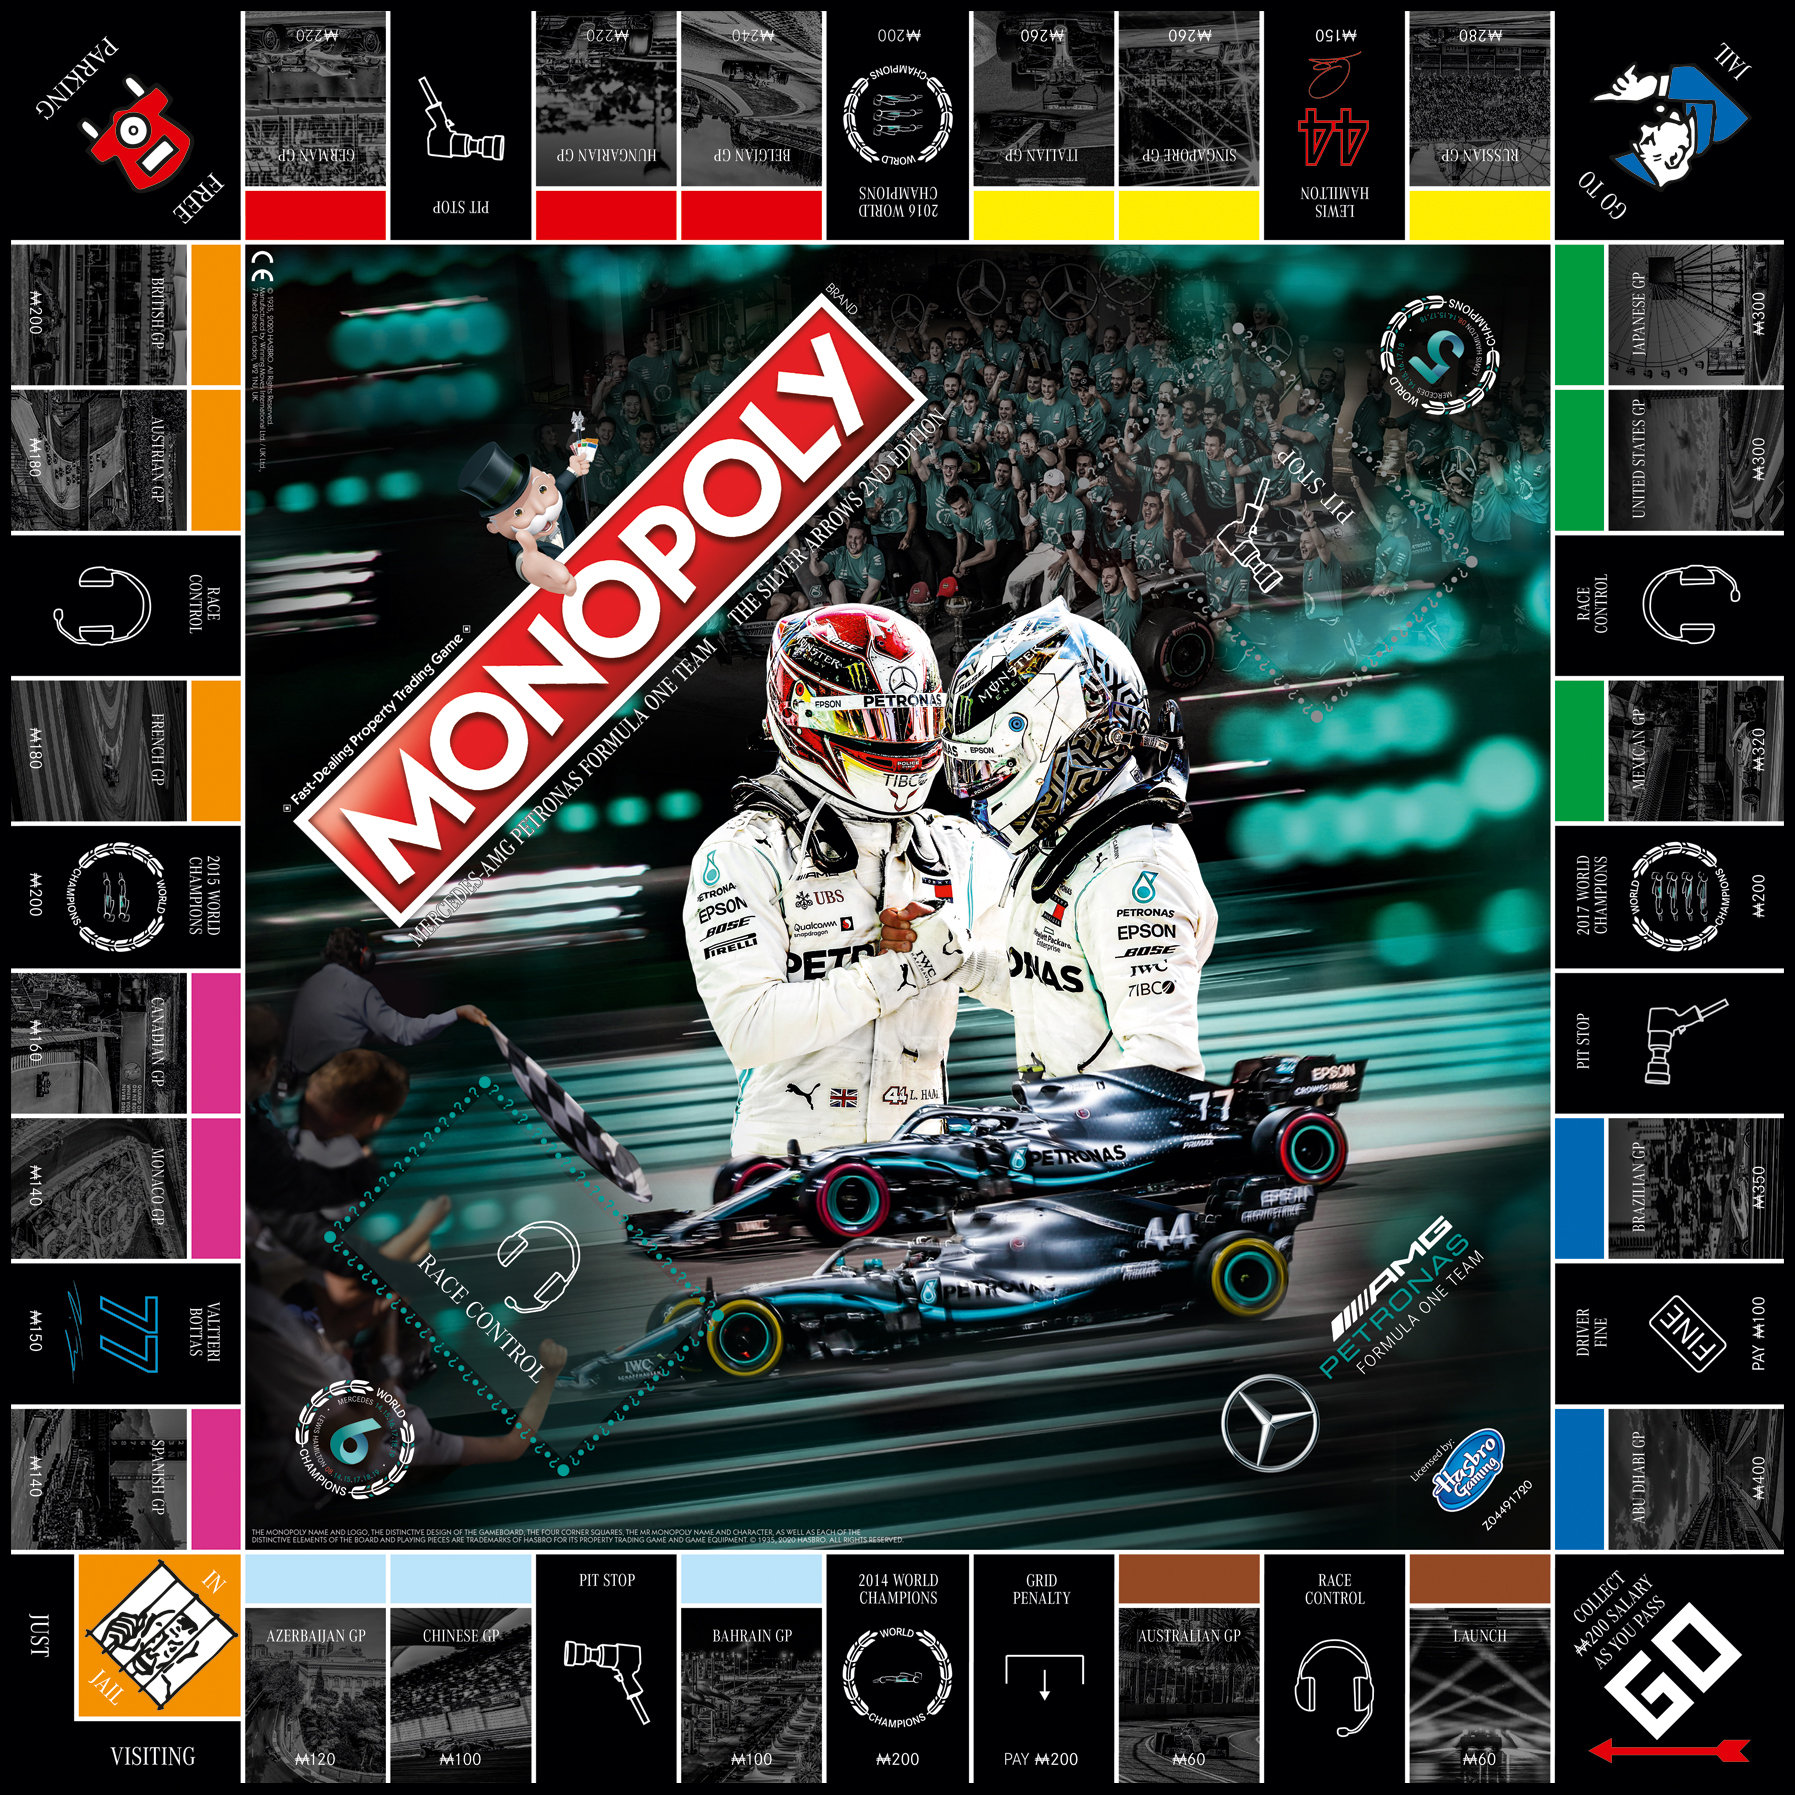 Mercedes Spielepaket: Monopoly + Coin + Spielkarten + Top Trumps + Puzzle